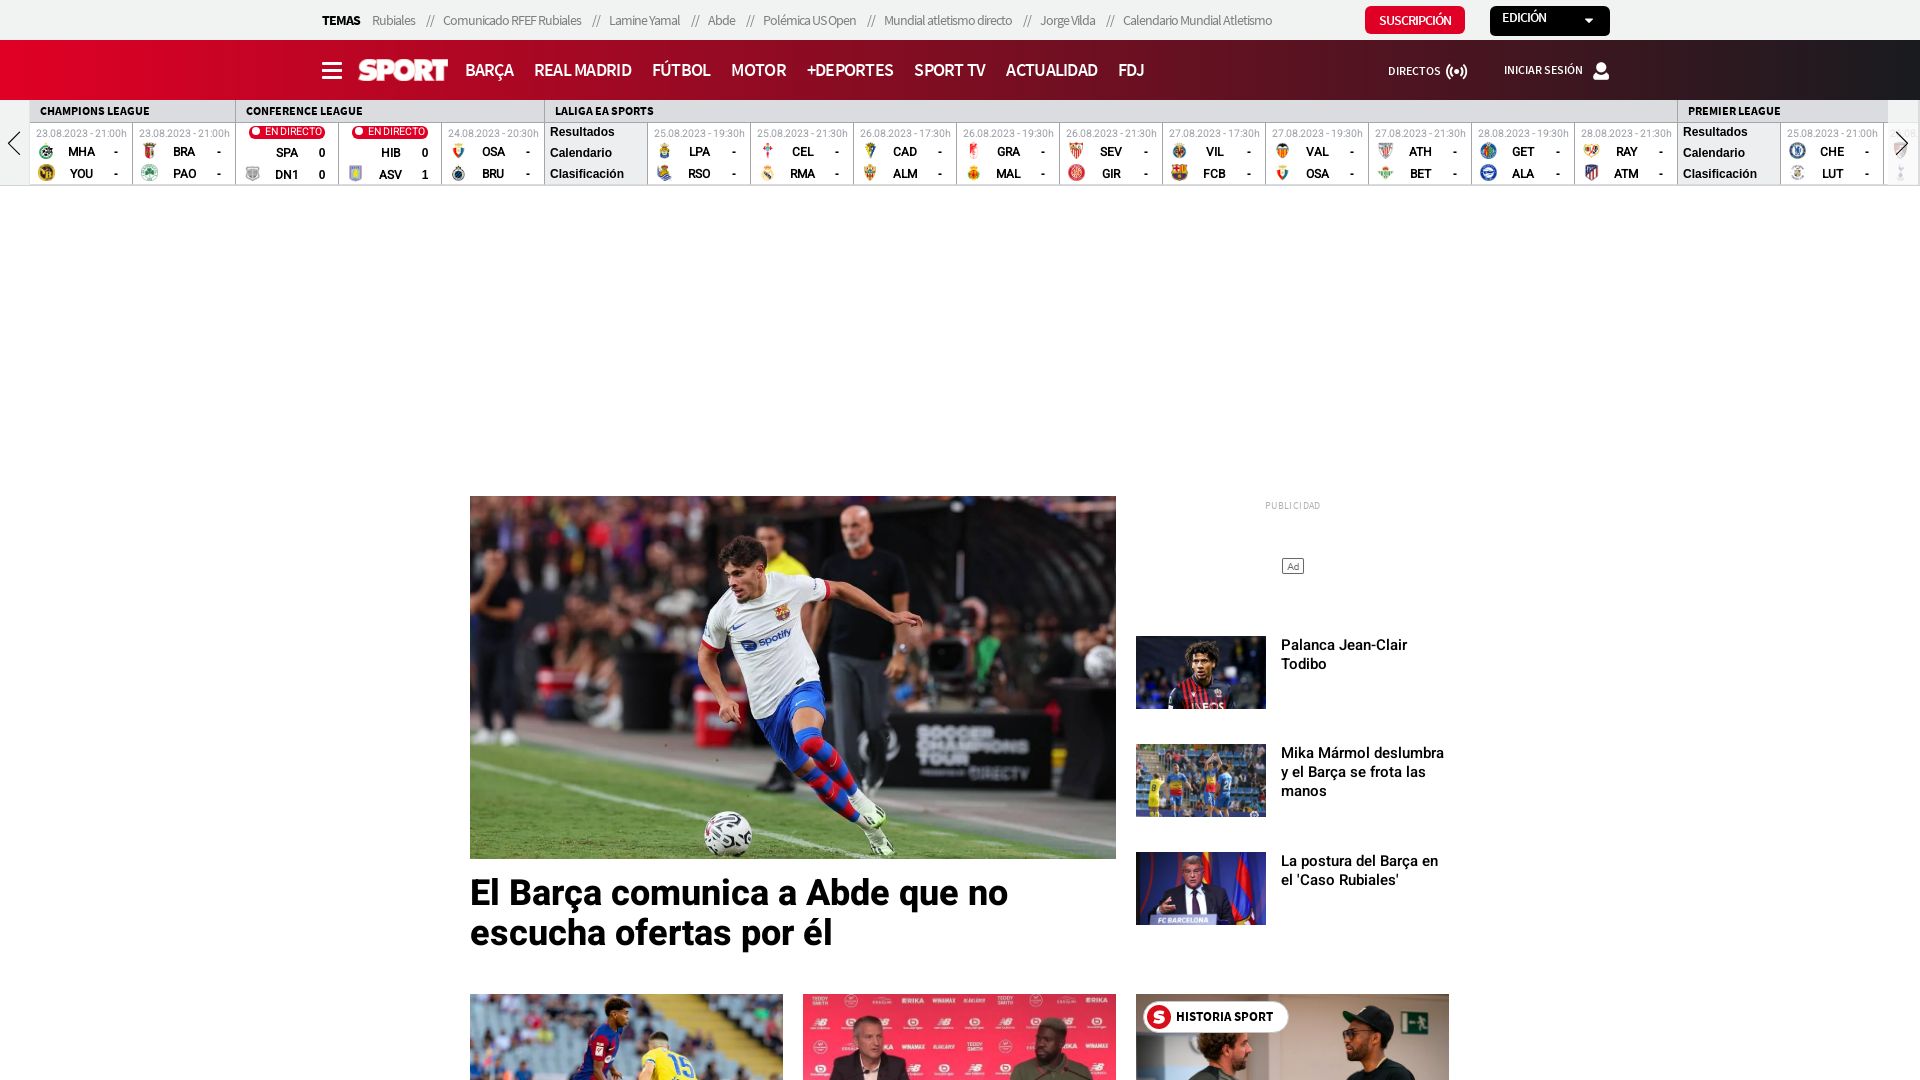 Статус сайта sport.es ОНЛАЙН